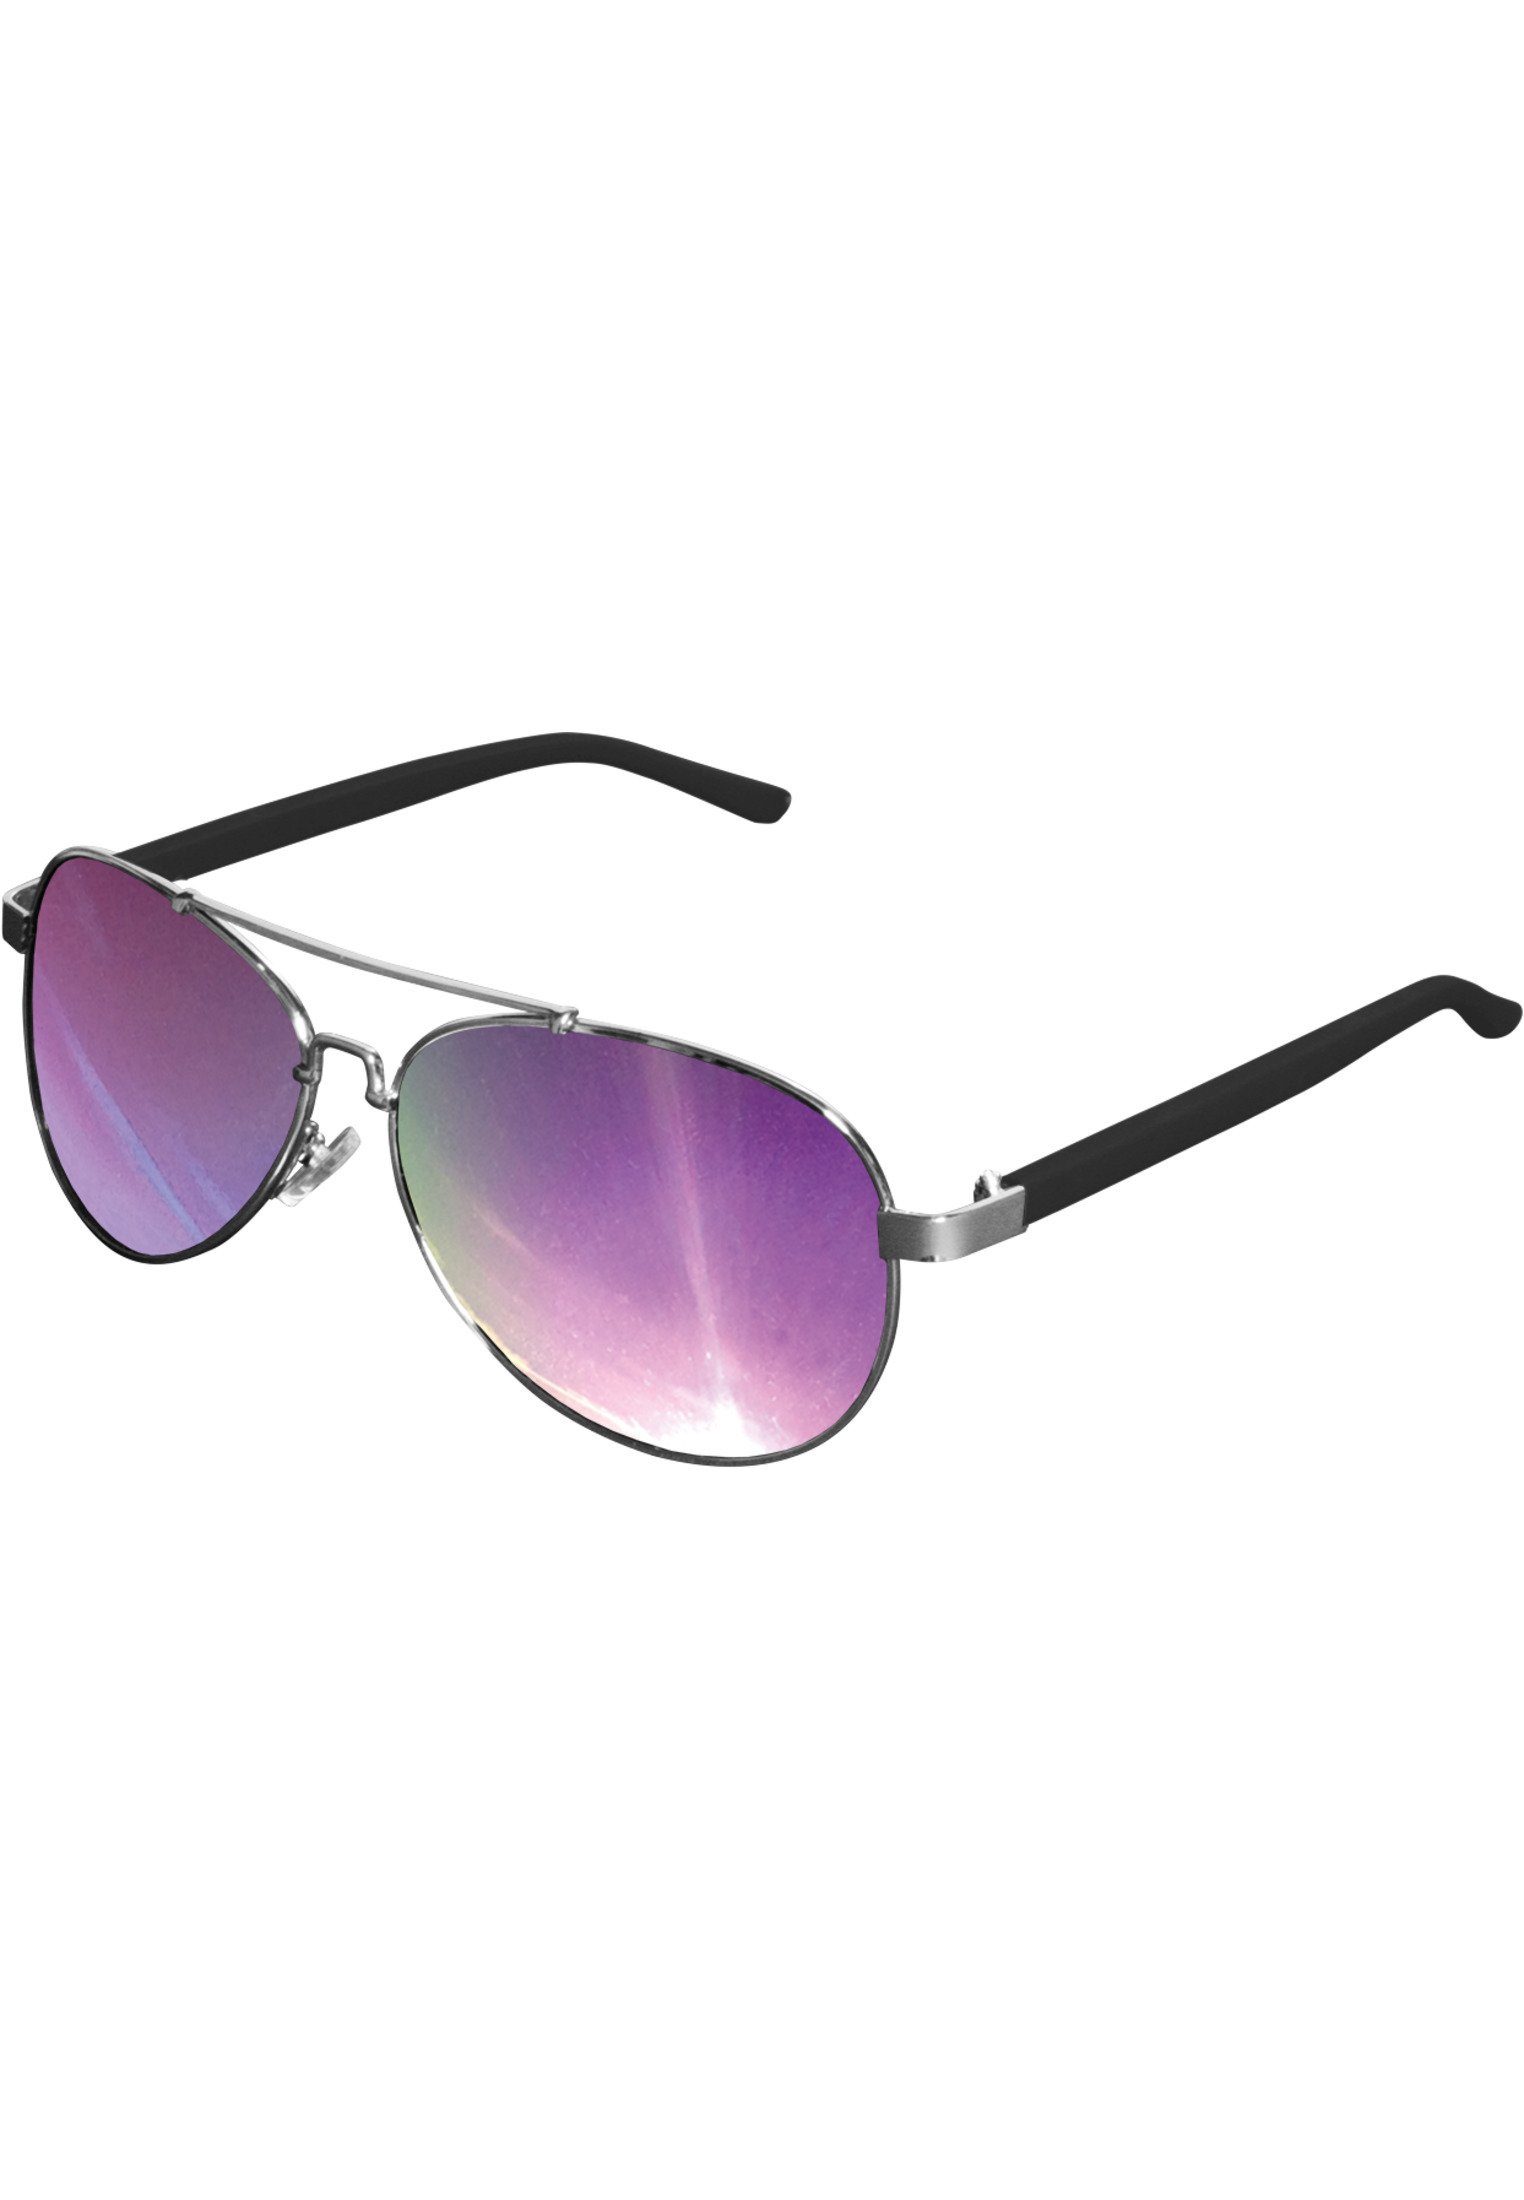 Mumbo Sonnenbrille silver/purple MSTRDS Sunglasses Accessoires Mirror